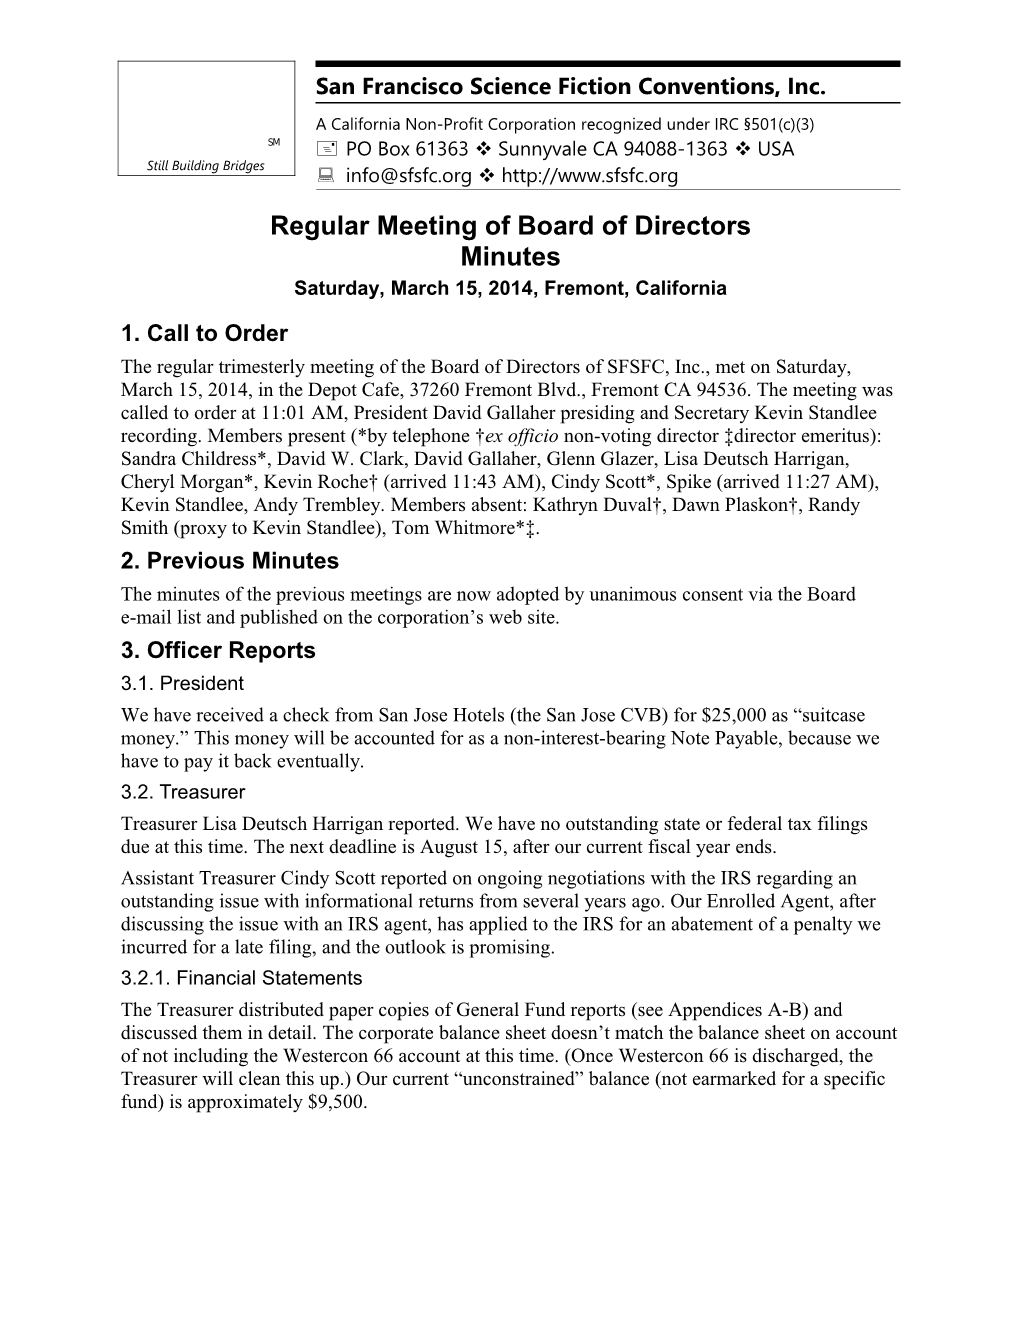 SFSFC Board of Directors Meeting Minutes